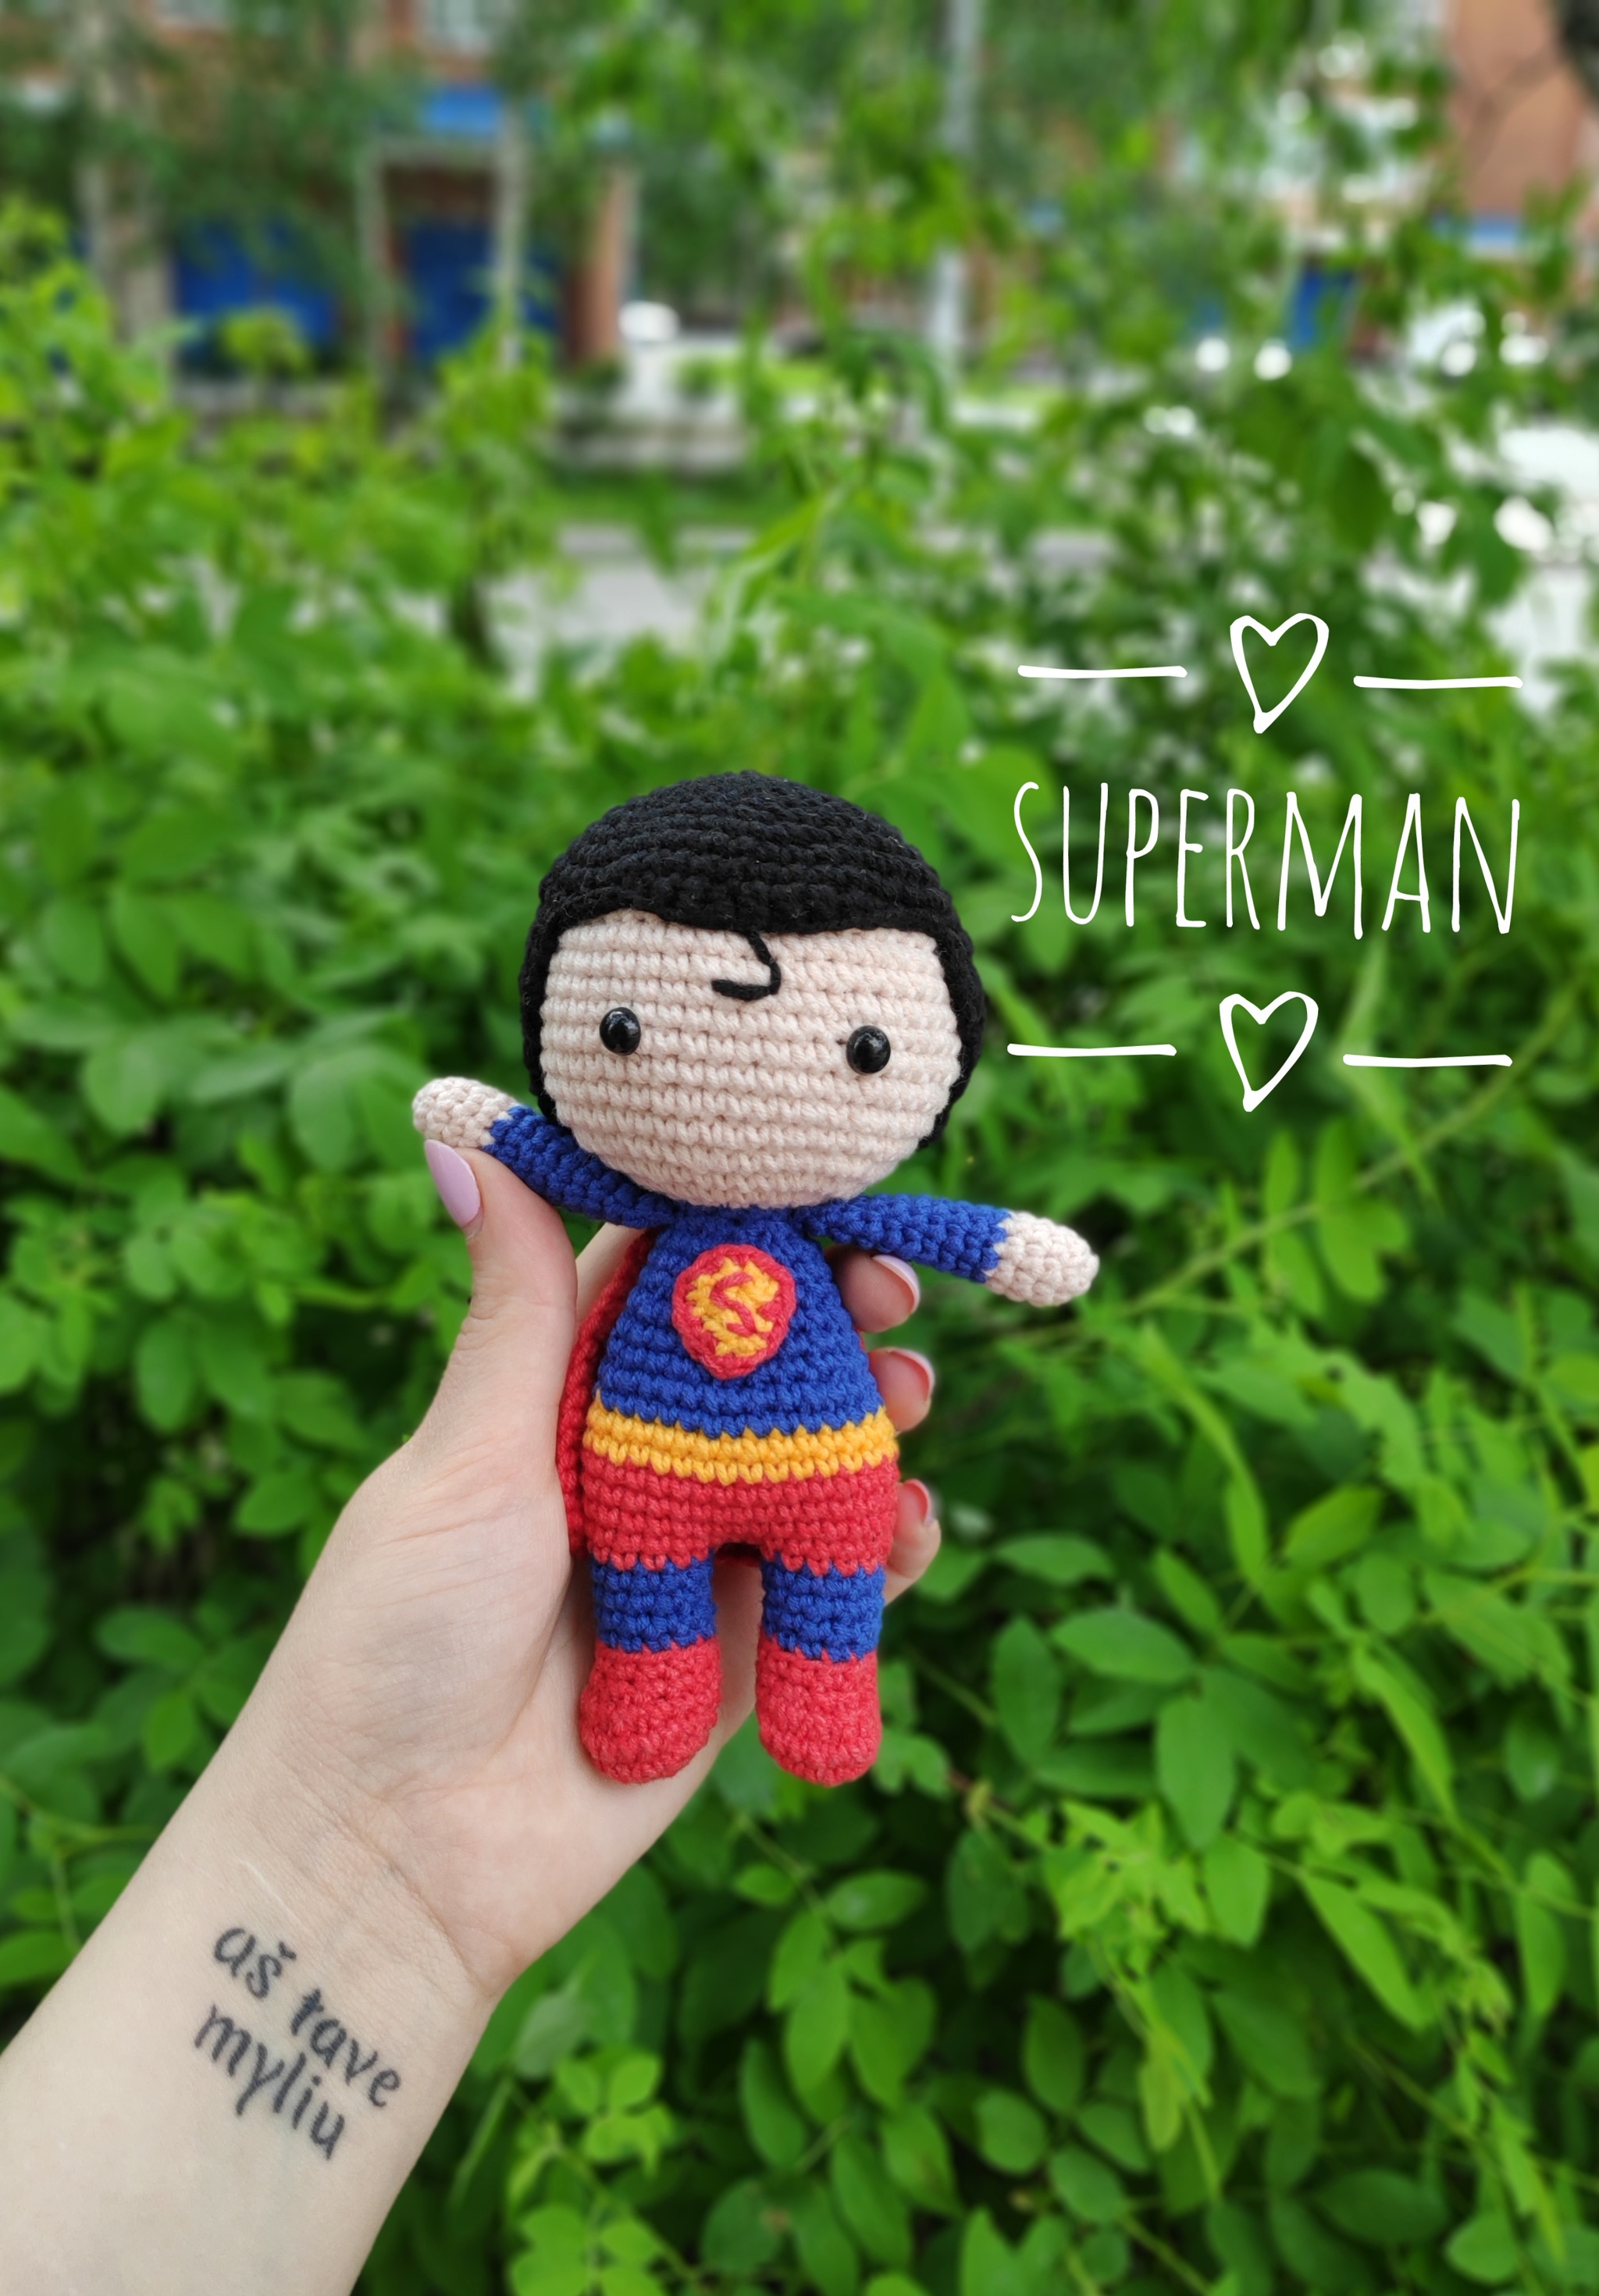 Superhero May - My, Knitting, Superman, Captain America, Star Wars, Knitted toys, Princess Leia, Amigurumi, Needlework without process, Longpost